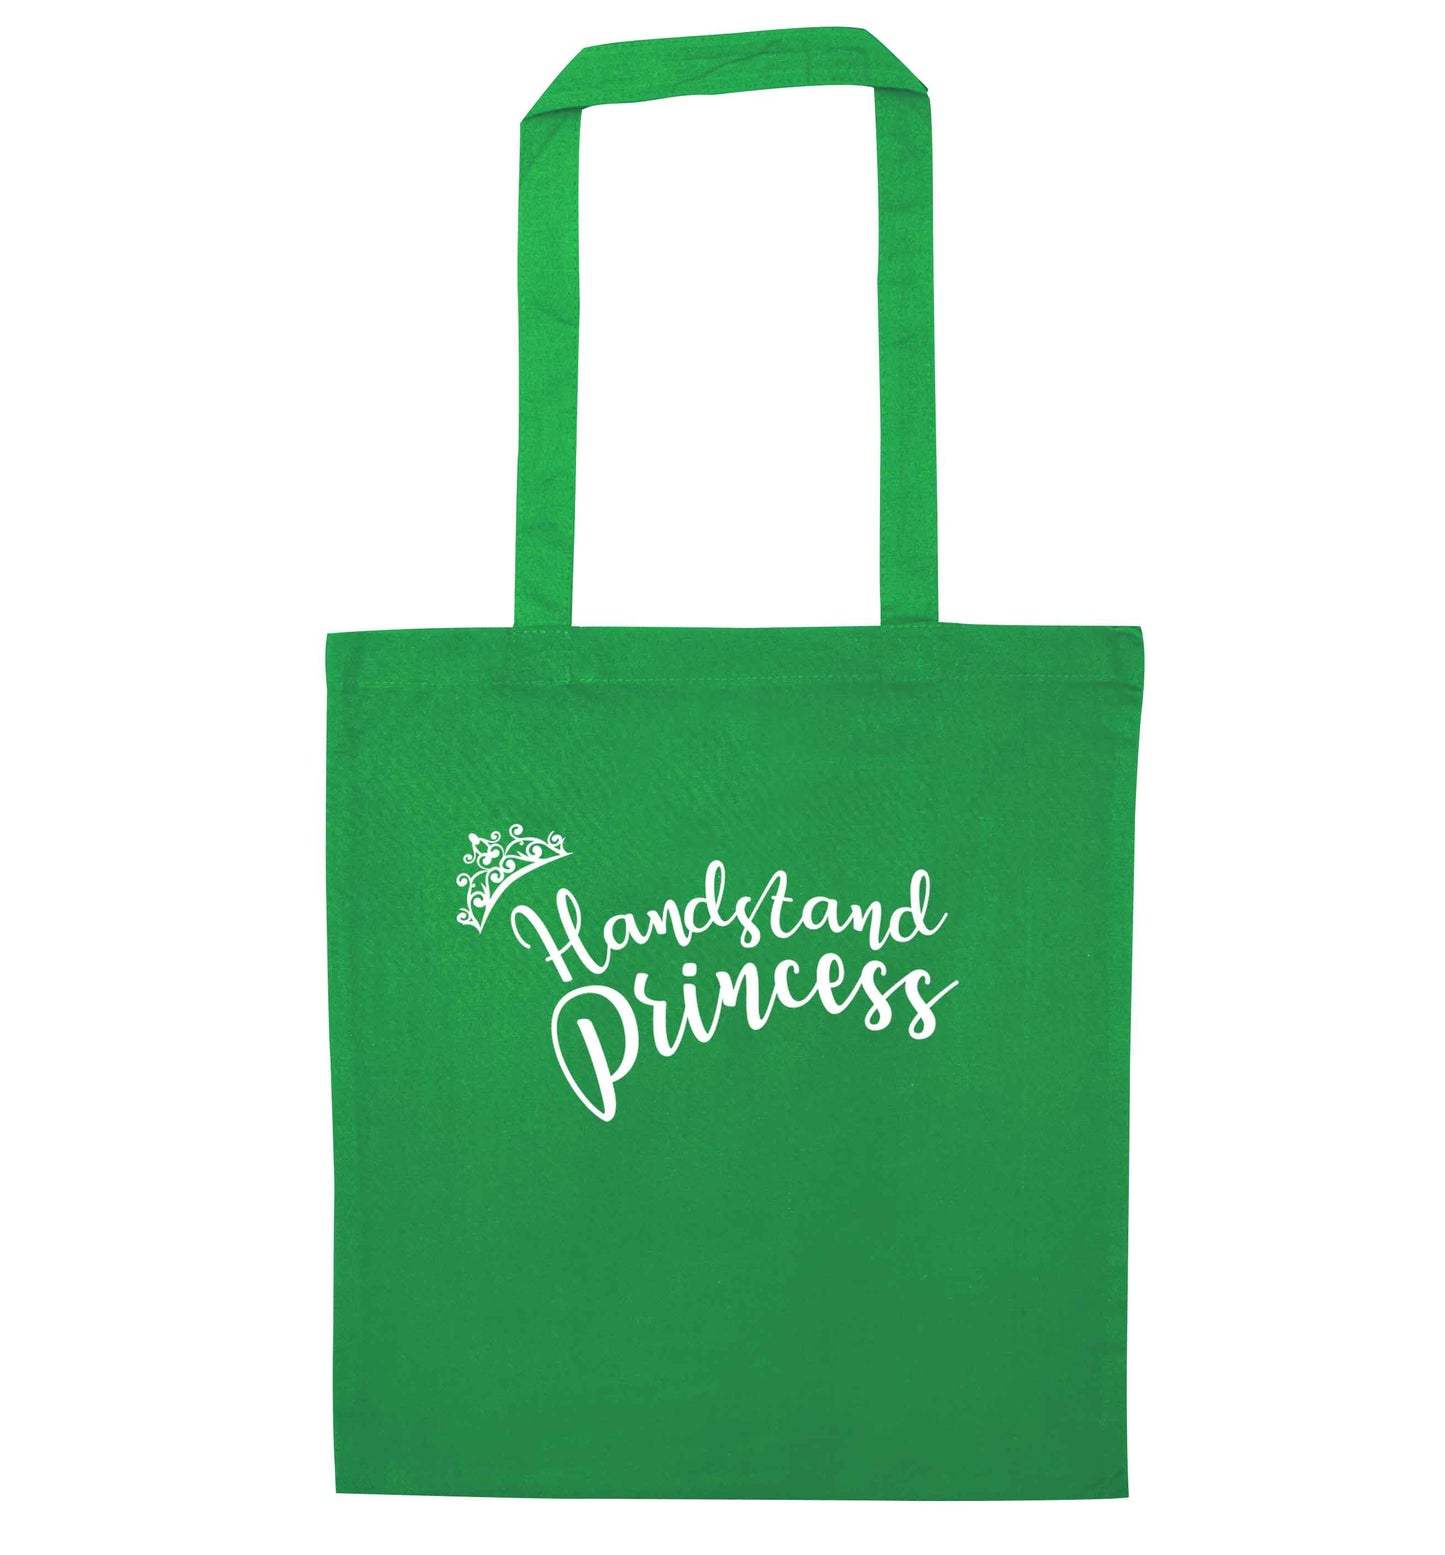 Handstand princess green tote bag